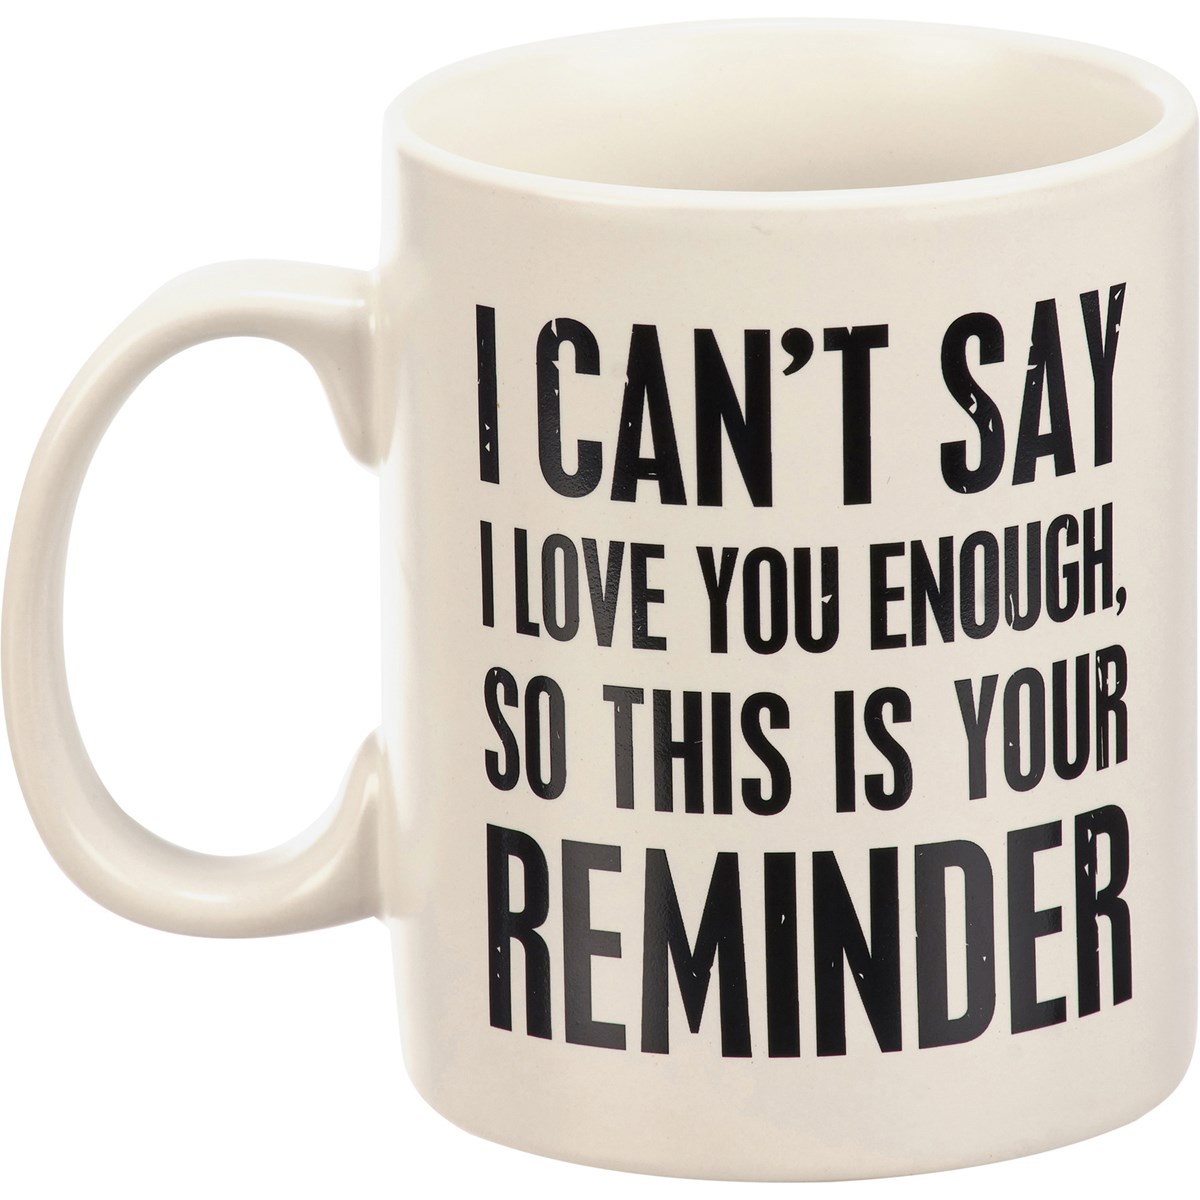 Mug - Can't Say I Love You Enough - 20 oz., 5.25" x 3.50" x 4.50" - Stoneware